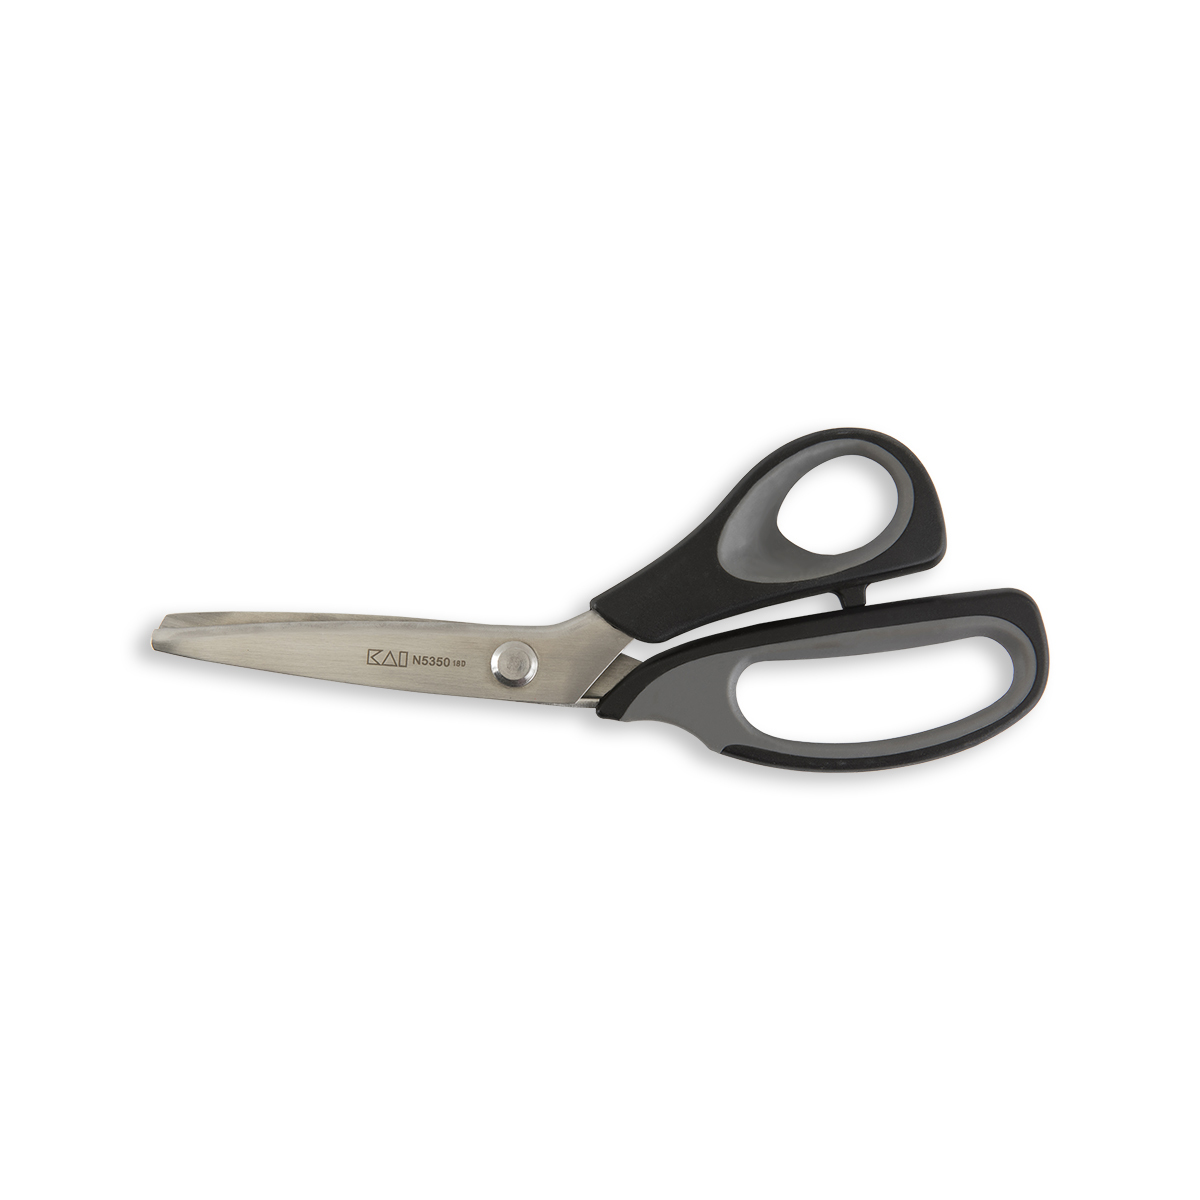 Kai 5350 8-inch Pinking Shears Scissors